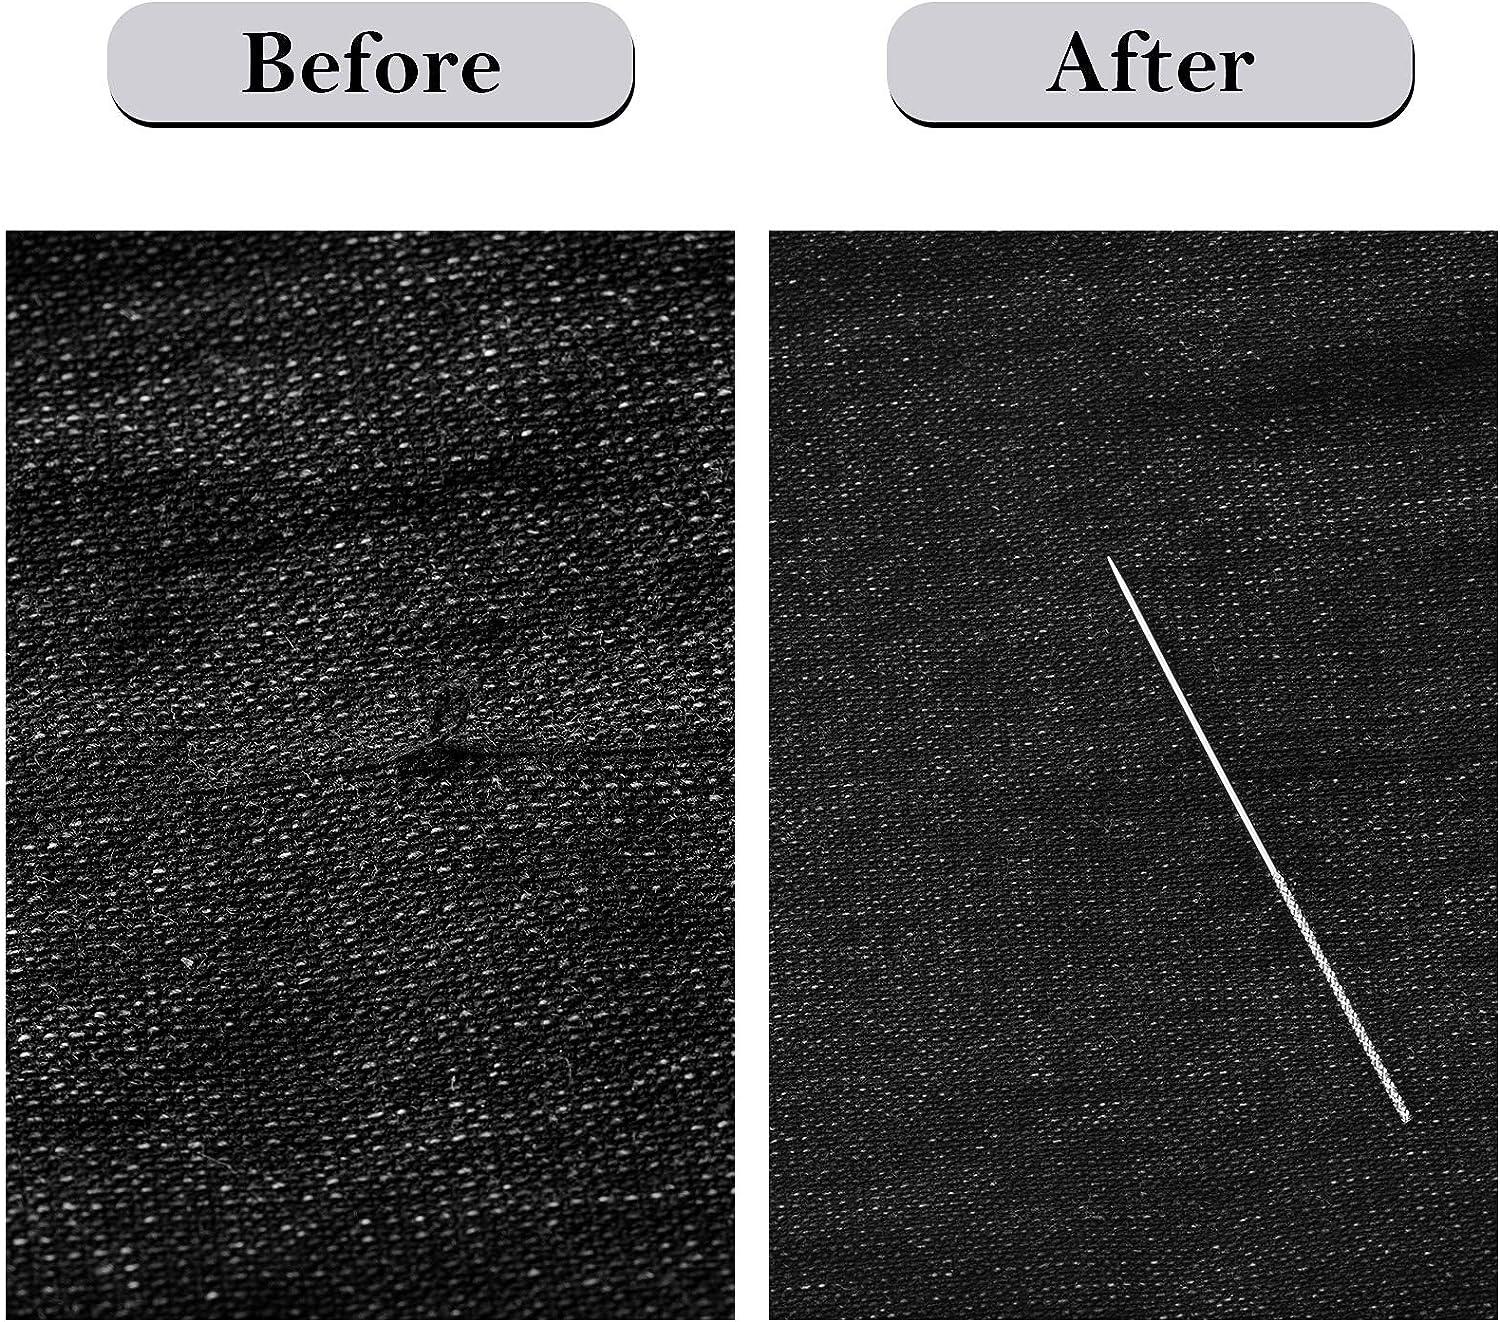 12 Pieces Repair Needle Repair Sewing Tool Repair Woven and Knits